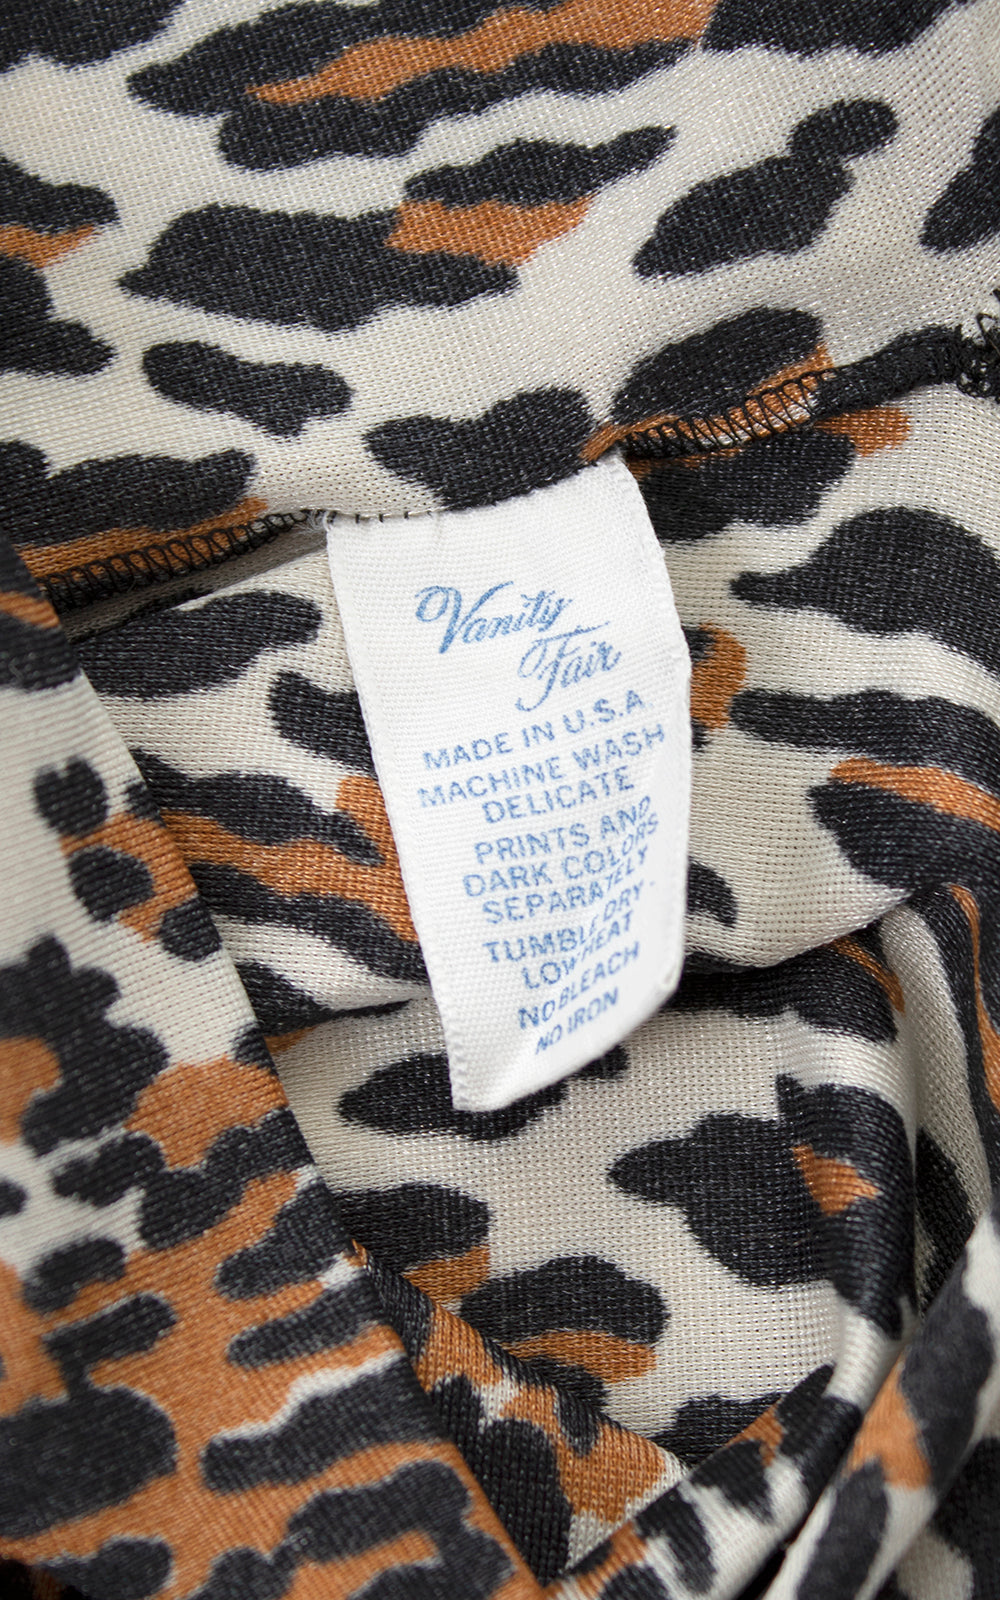 1970s VANITY FAIR Leopard Print Bodysuit | x-small